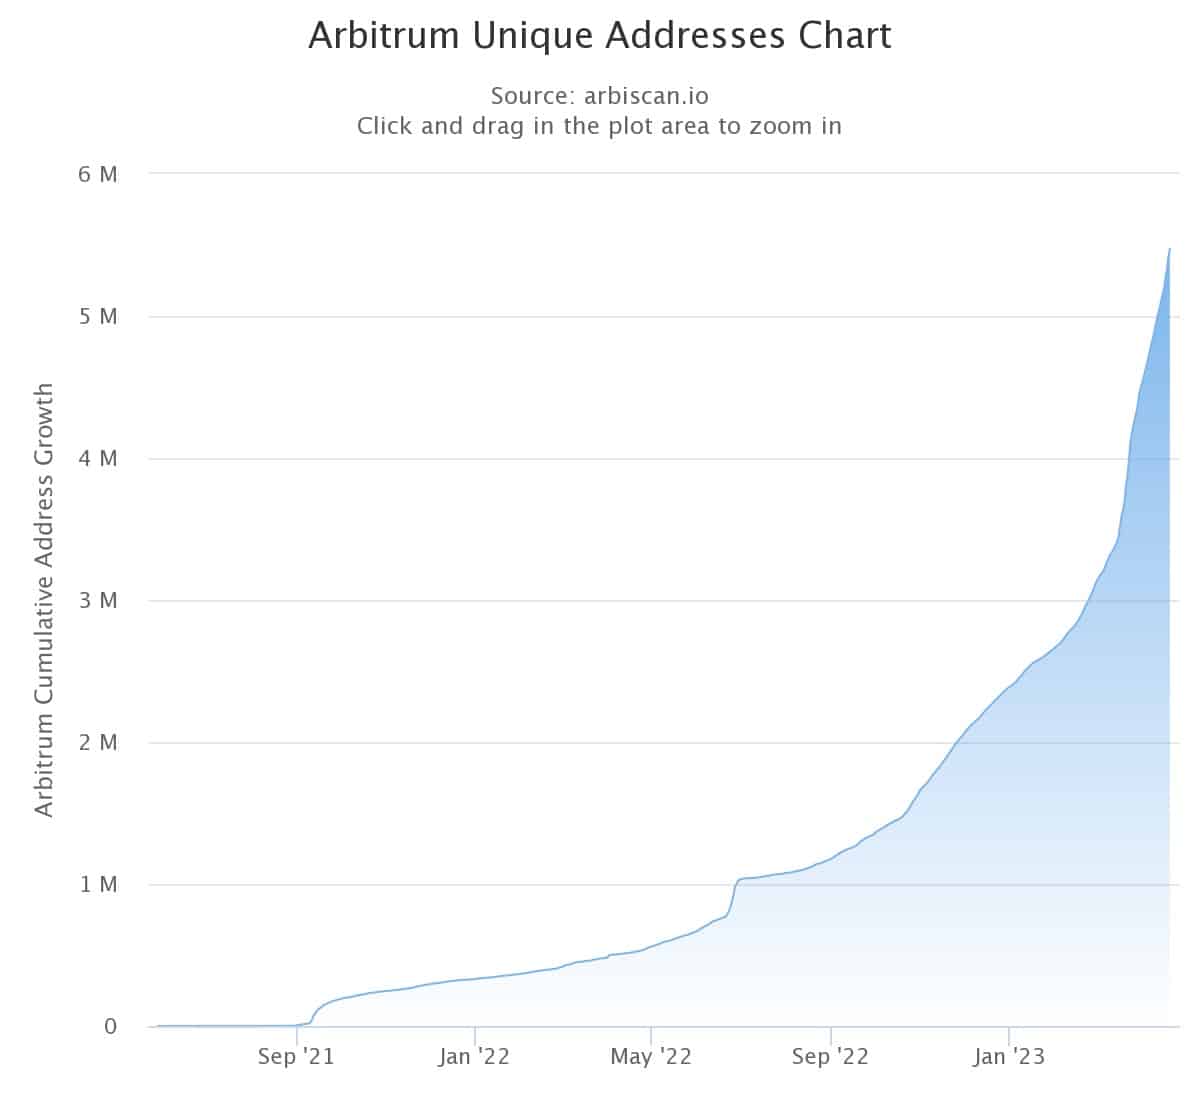 Obrázek 4 - Počet vytvořených adres na Arbitrum One